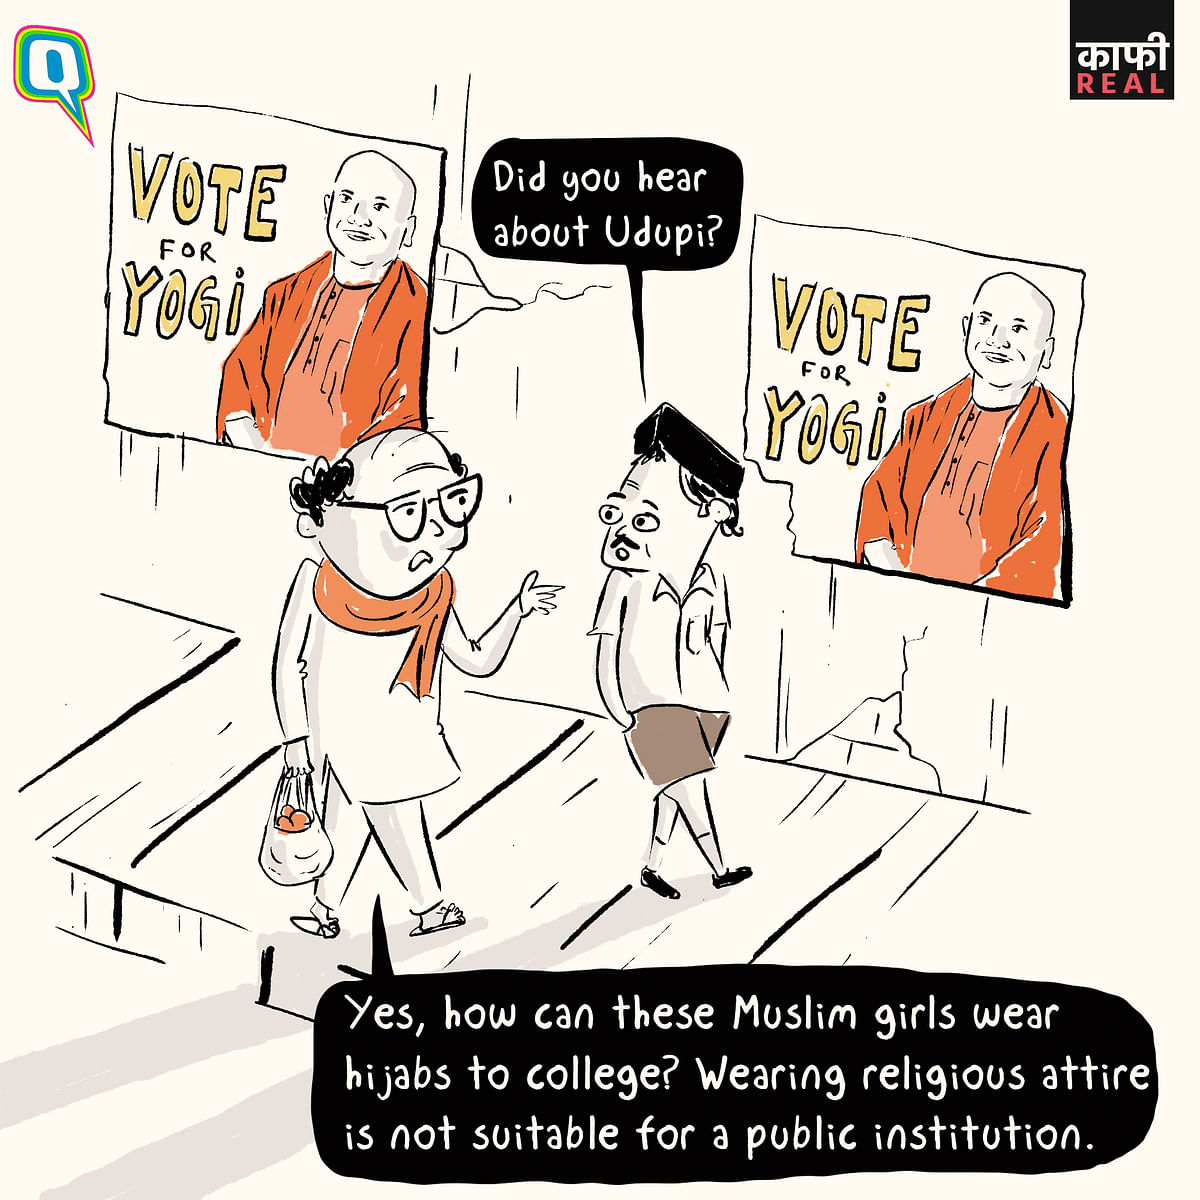 Yogi fans shake their heads in anger at what is happening in Udupi. A Kaafi Real cartoon on Karnataka's hijab row.